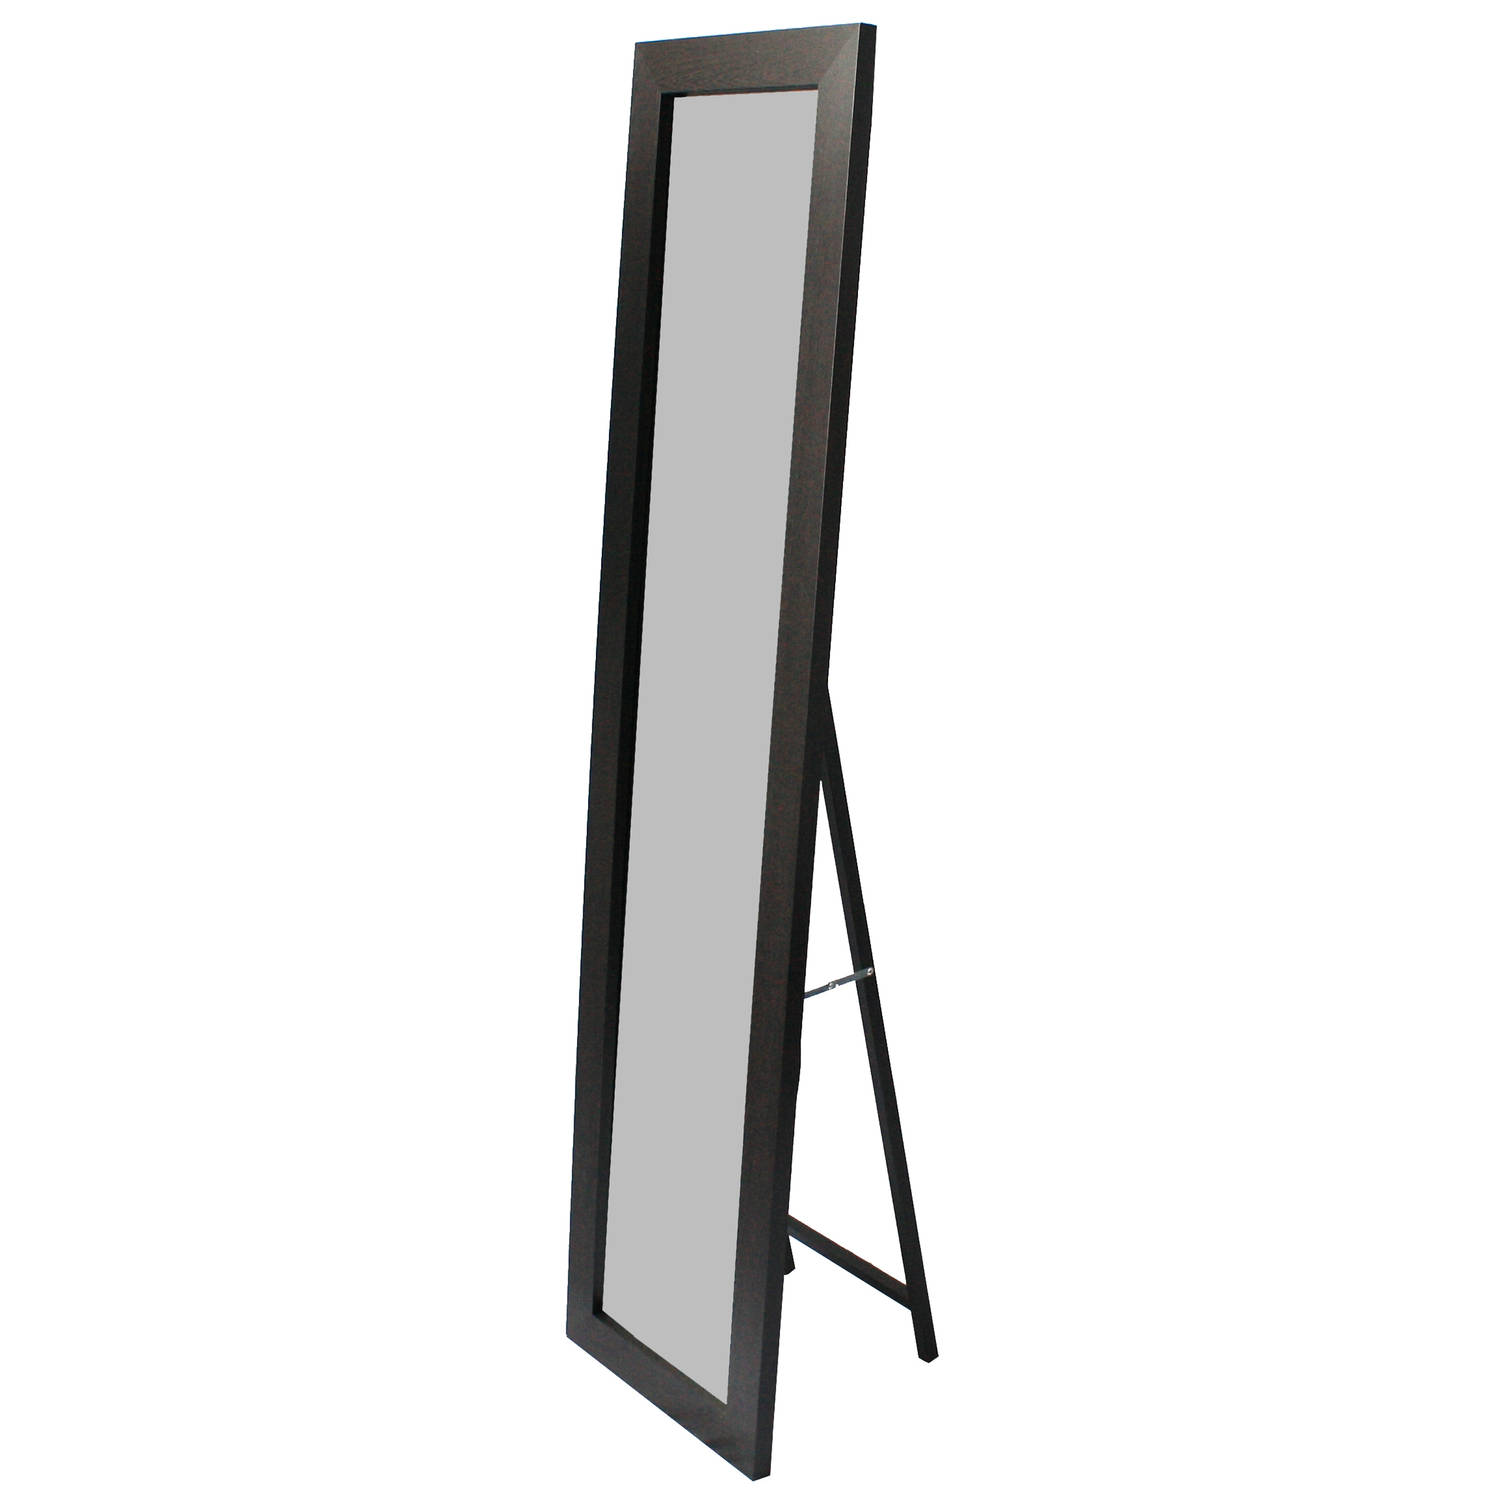 Lowander staande spiegel 160x40 cm passpiegel-vrijstaande garderobe spiegel zwart houten lijst